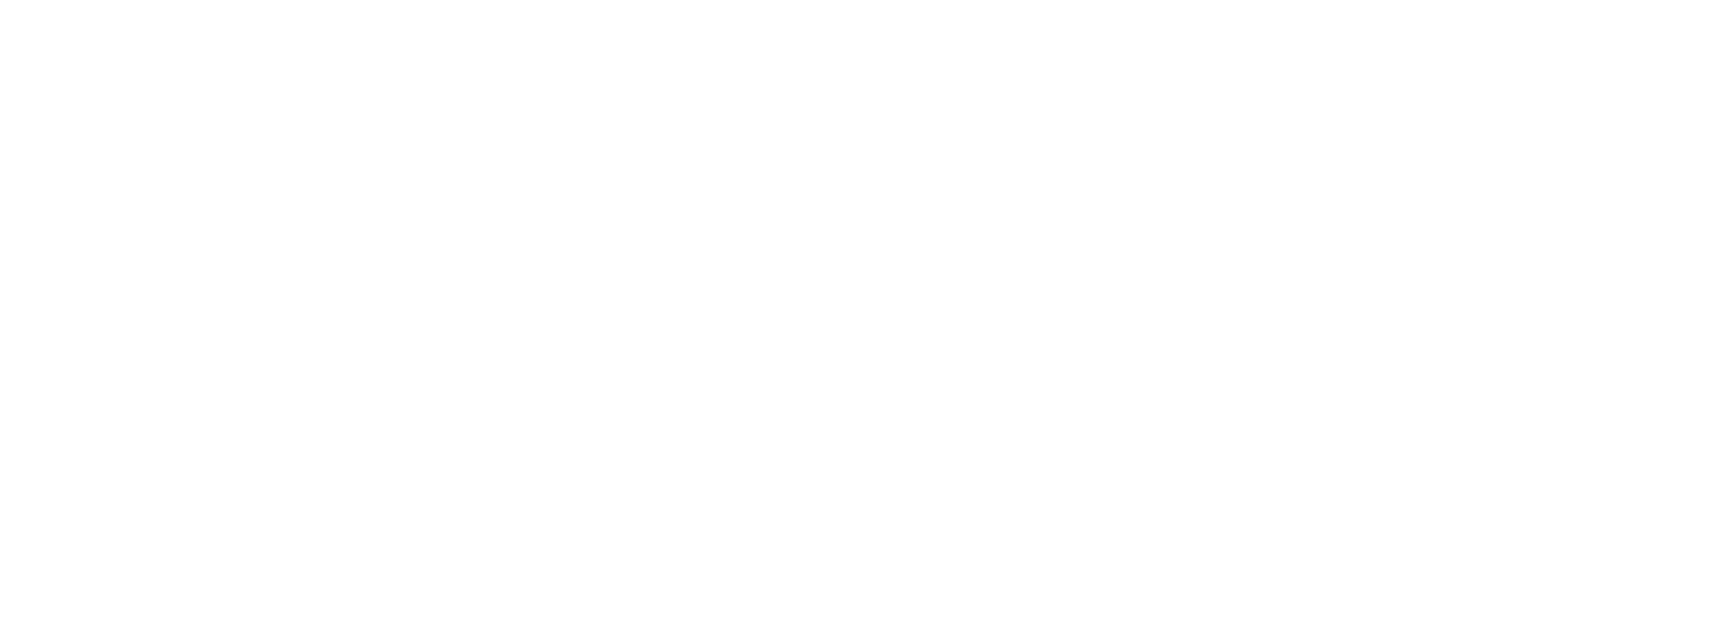 http://www.iacg.co.th/uploads/files/iacg-logo_1.png